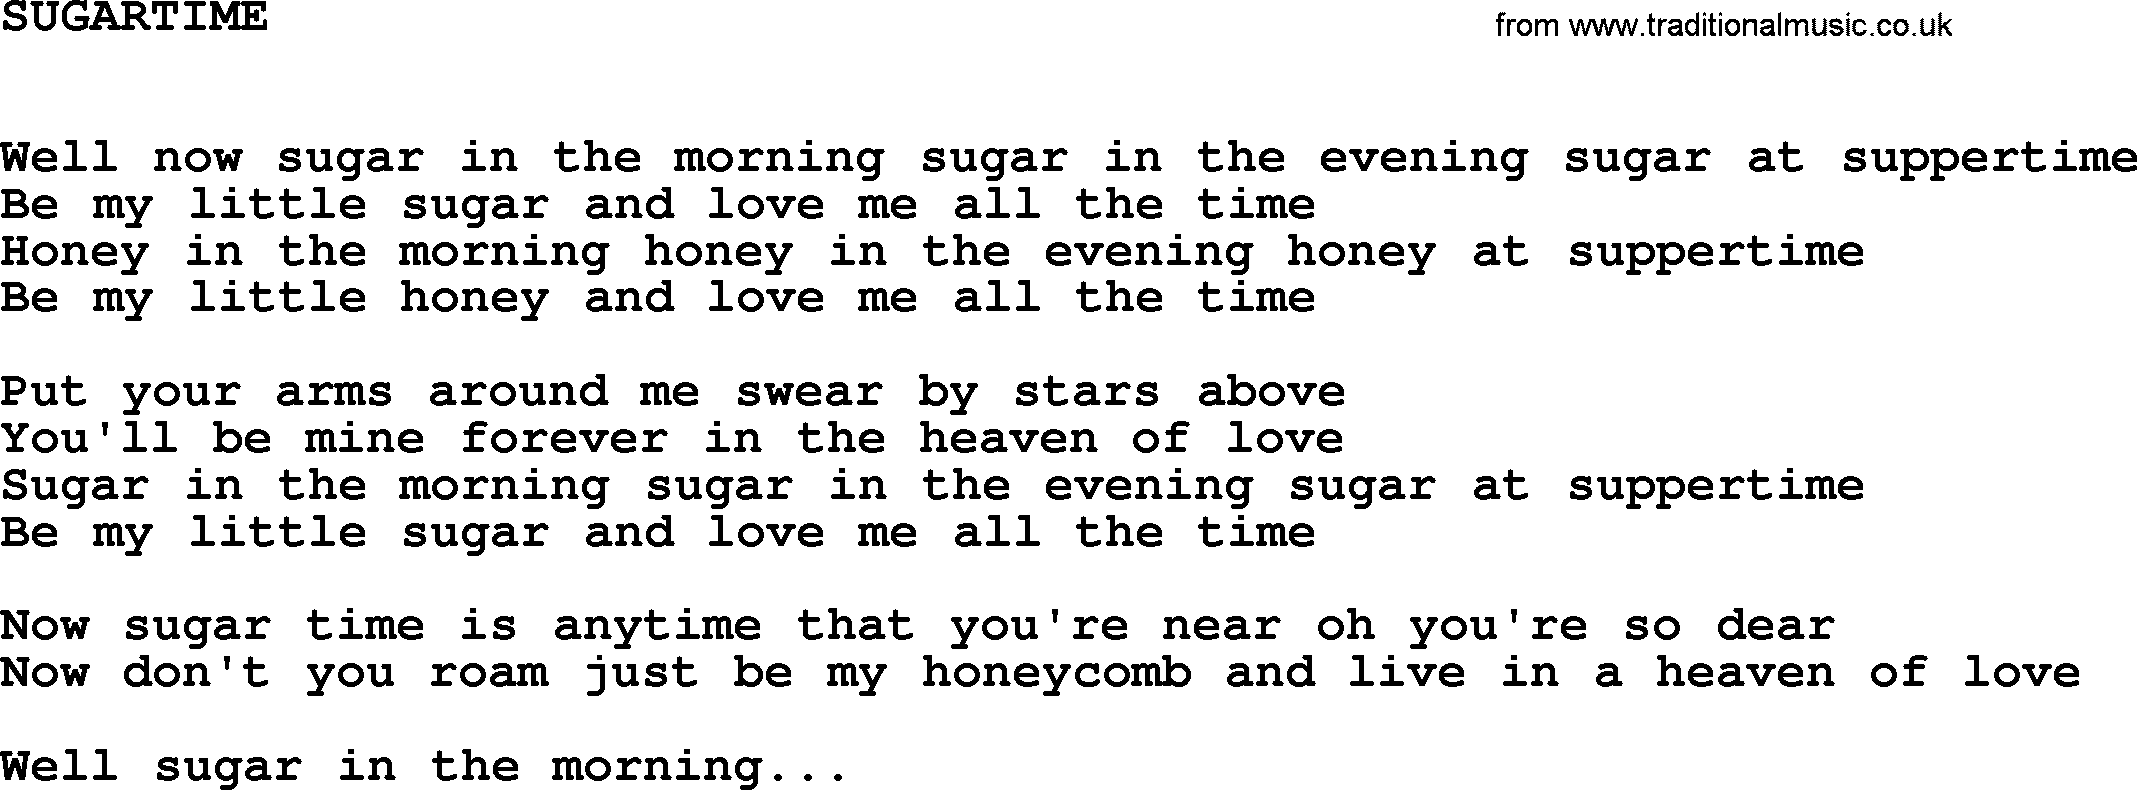 Johnny Cash song Sugartime.txt lyrics